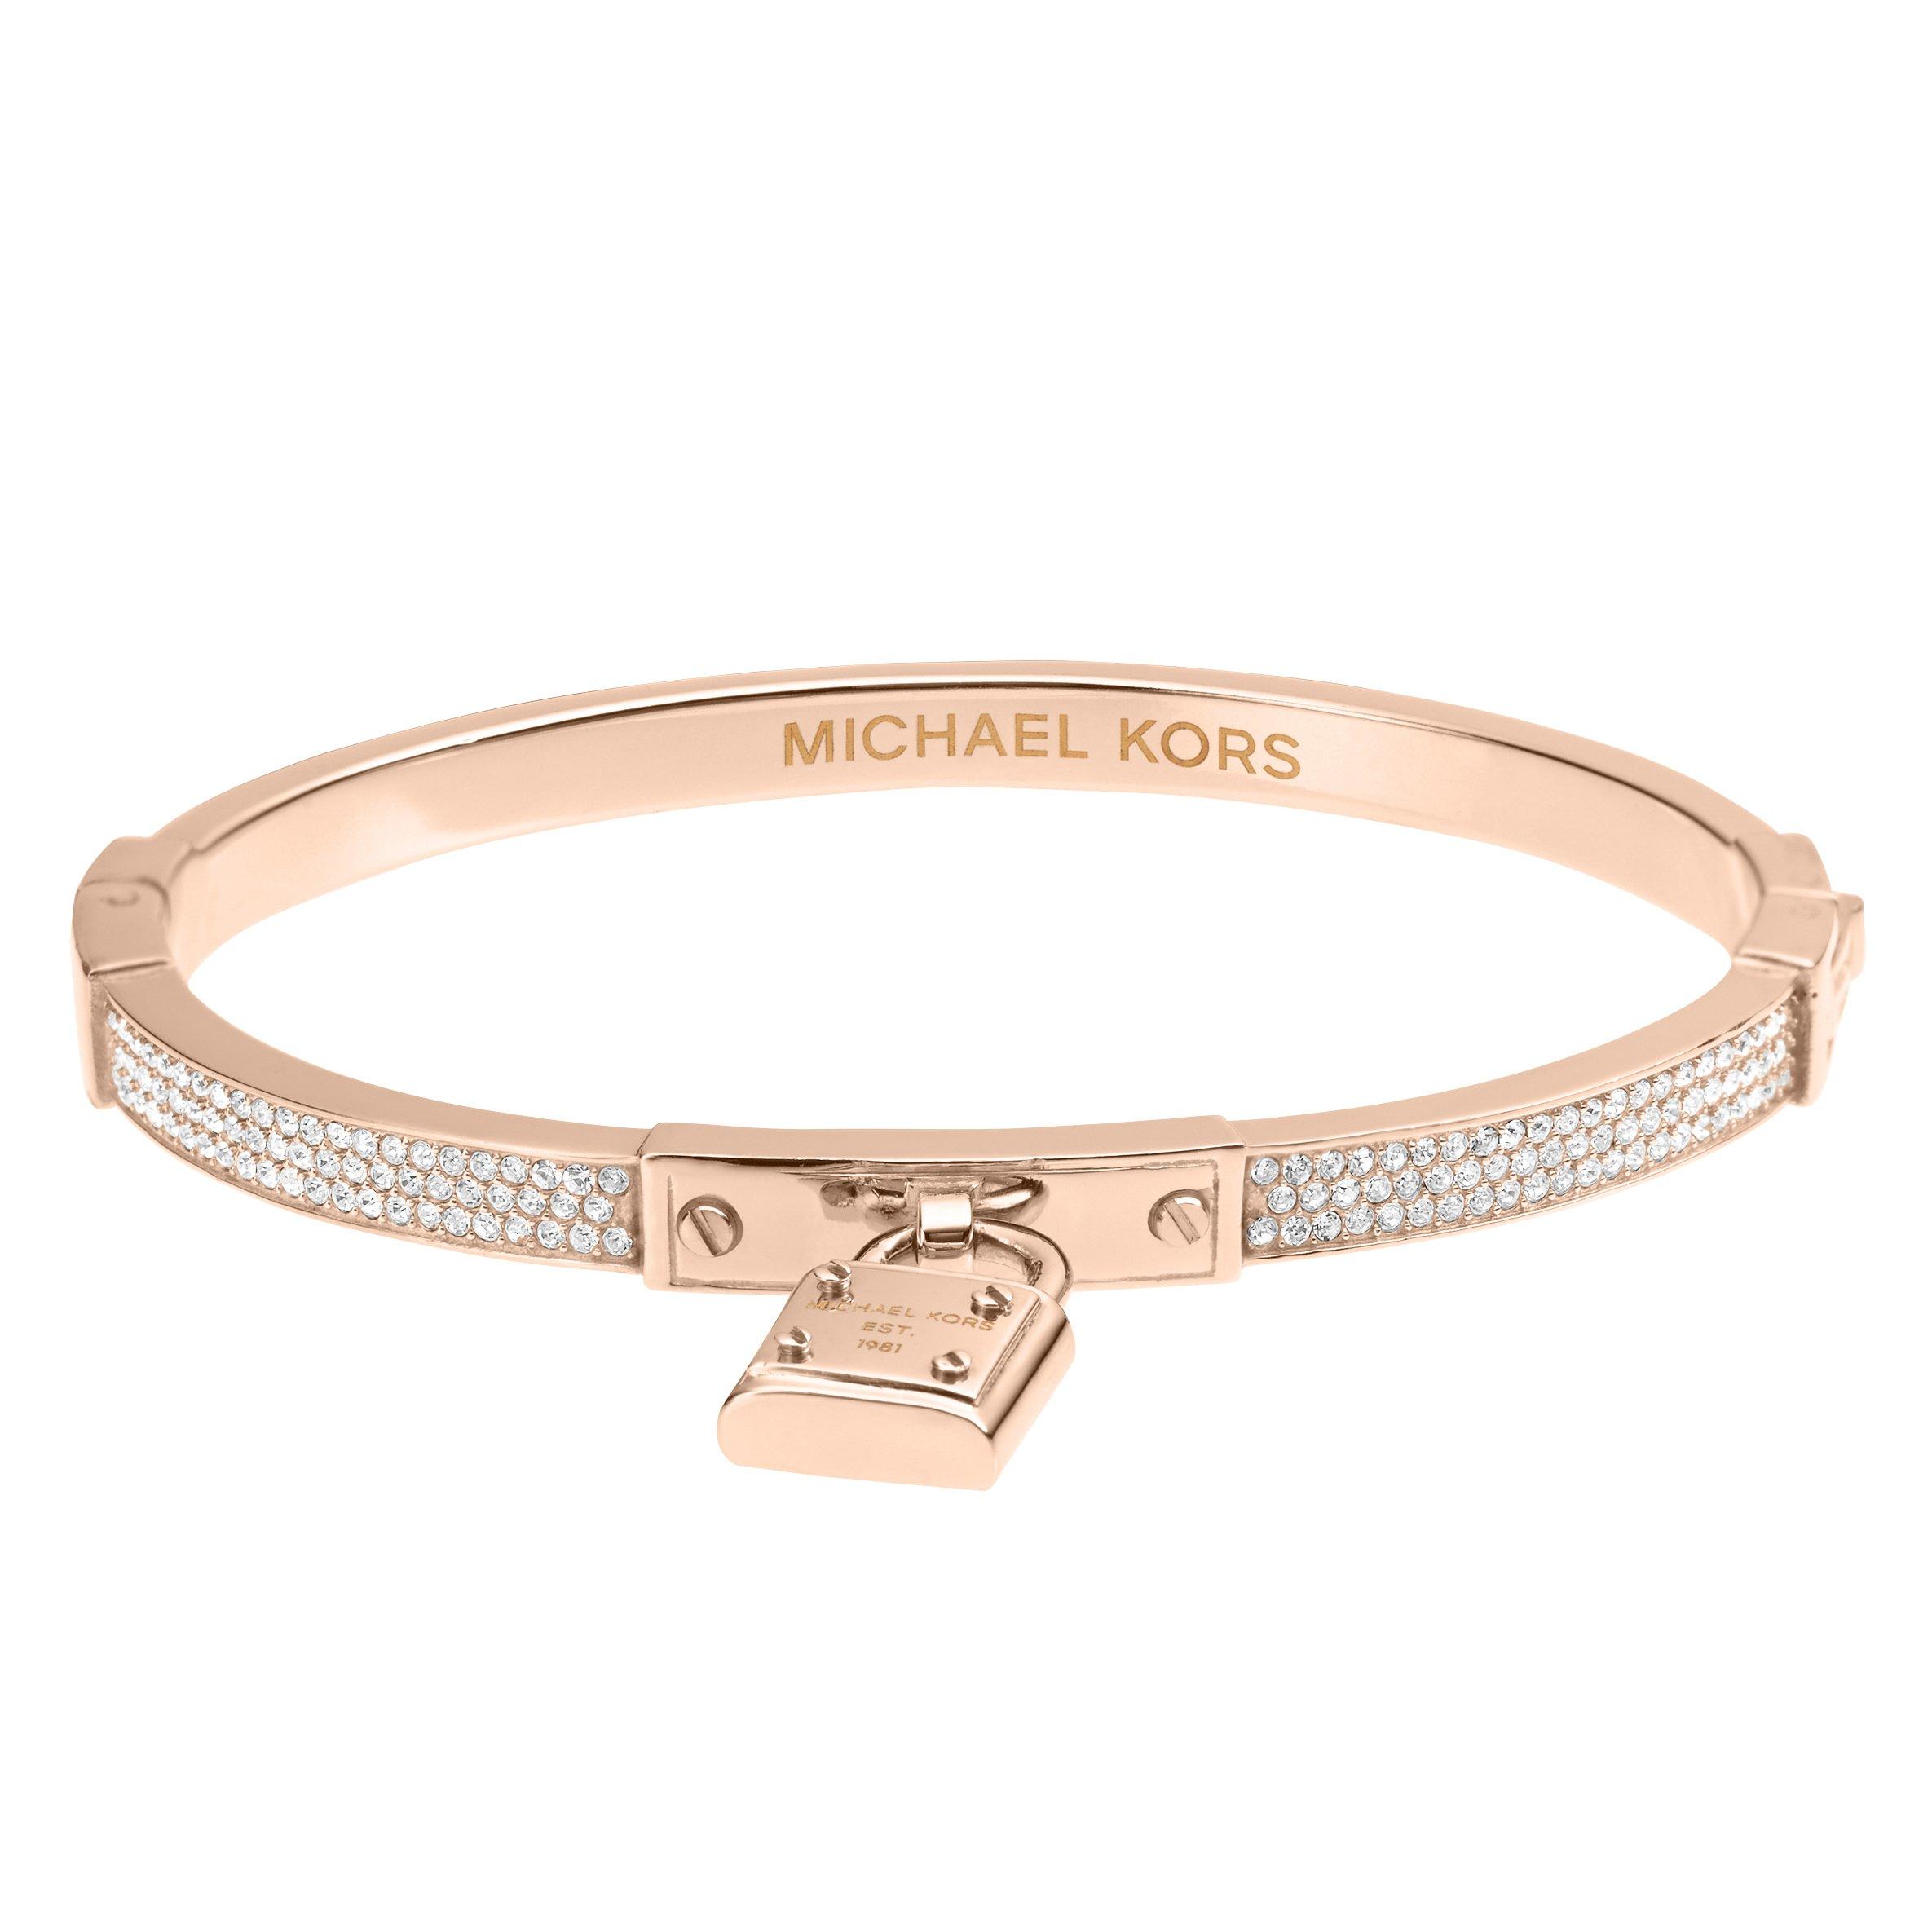 Michael Kors Glitz Rose Gold Tone Crystal Padlock Bracelet | 0008635 |  Beaverbrooks the Jewellers